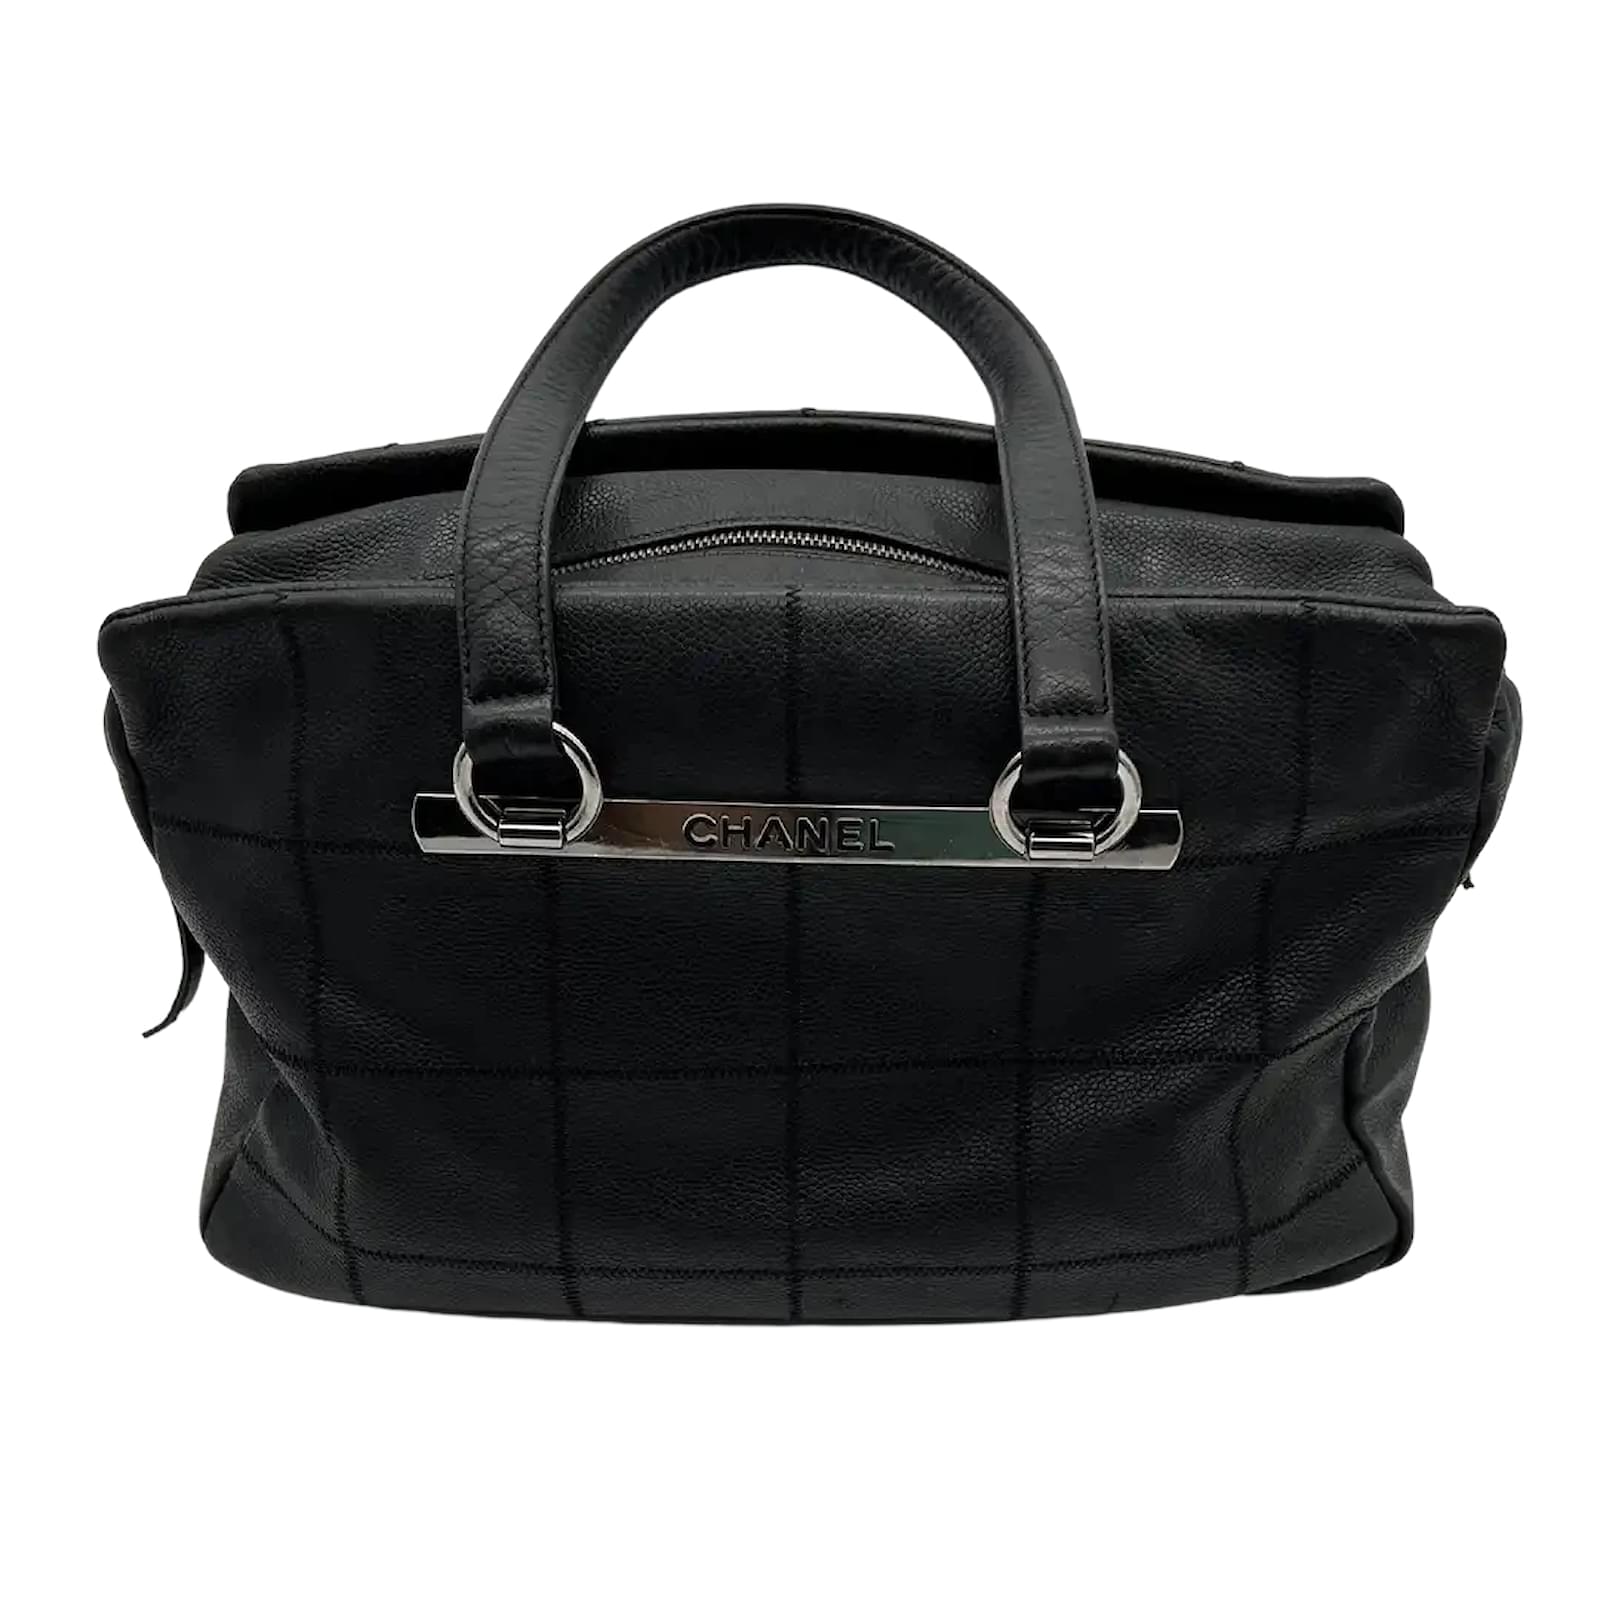 CHANEL, Bags, Chanel Chocolate Bar Handbag Caviar Leather Black